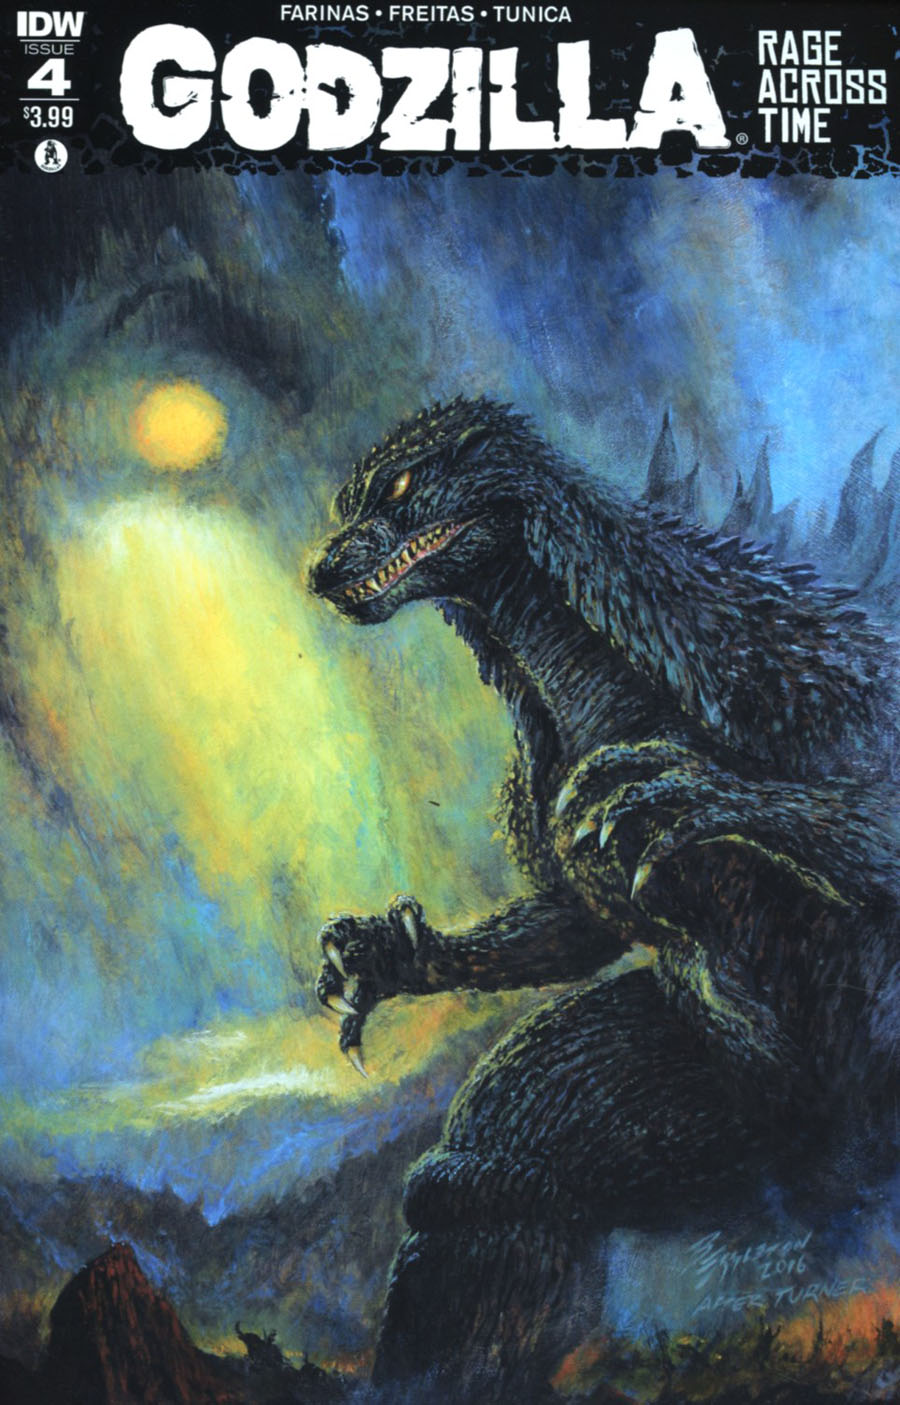 Godzilla Rage Across Time #4 Cover A Regular Bob Eggleton Cover